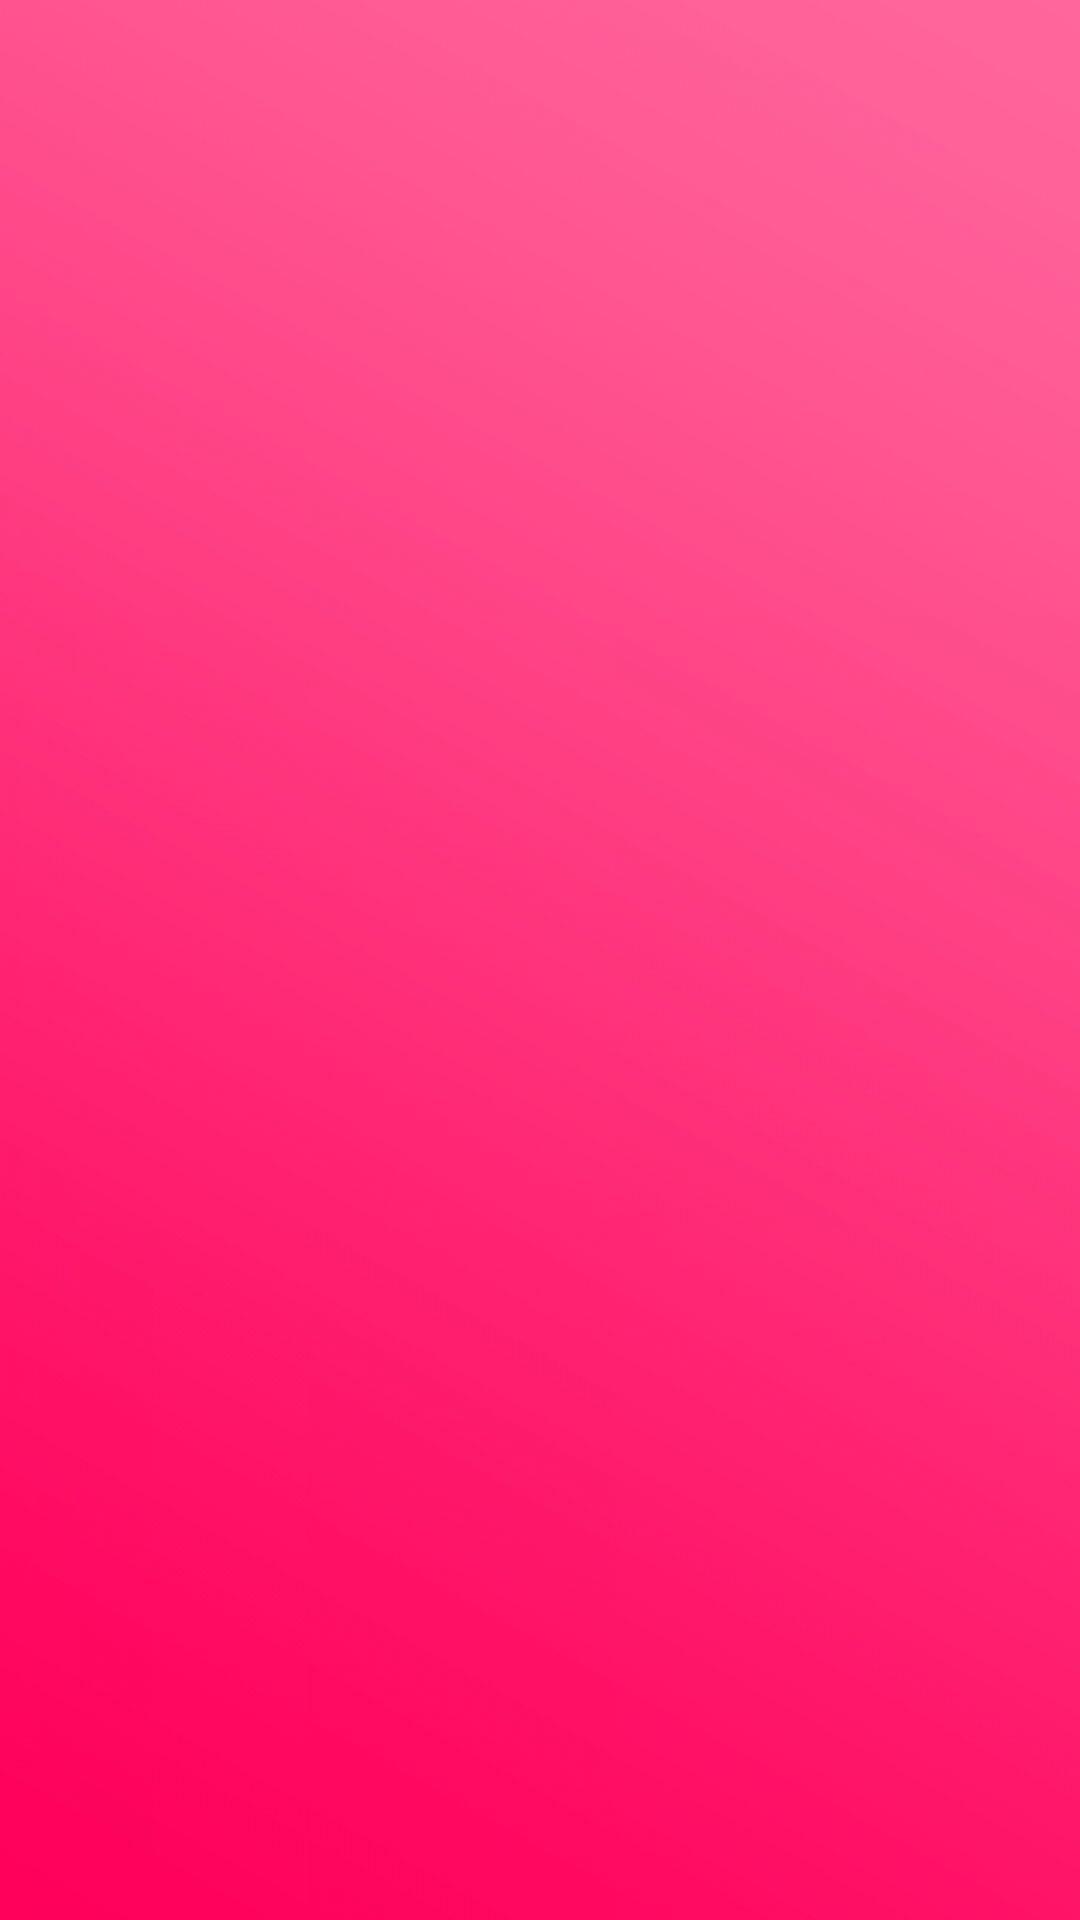 HD Background Dark Pink Solid Color Gradient Bright Light Wallpaper